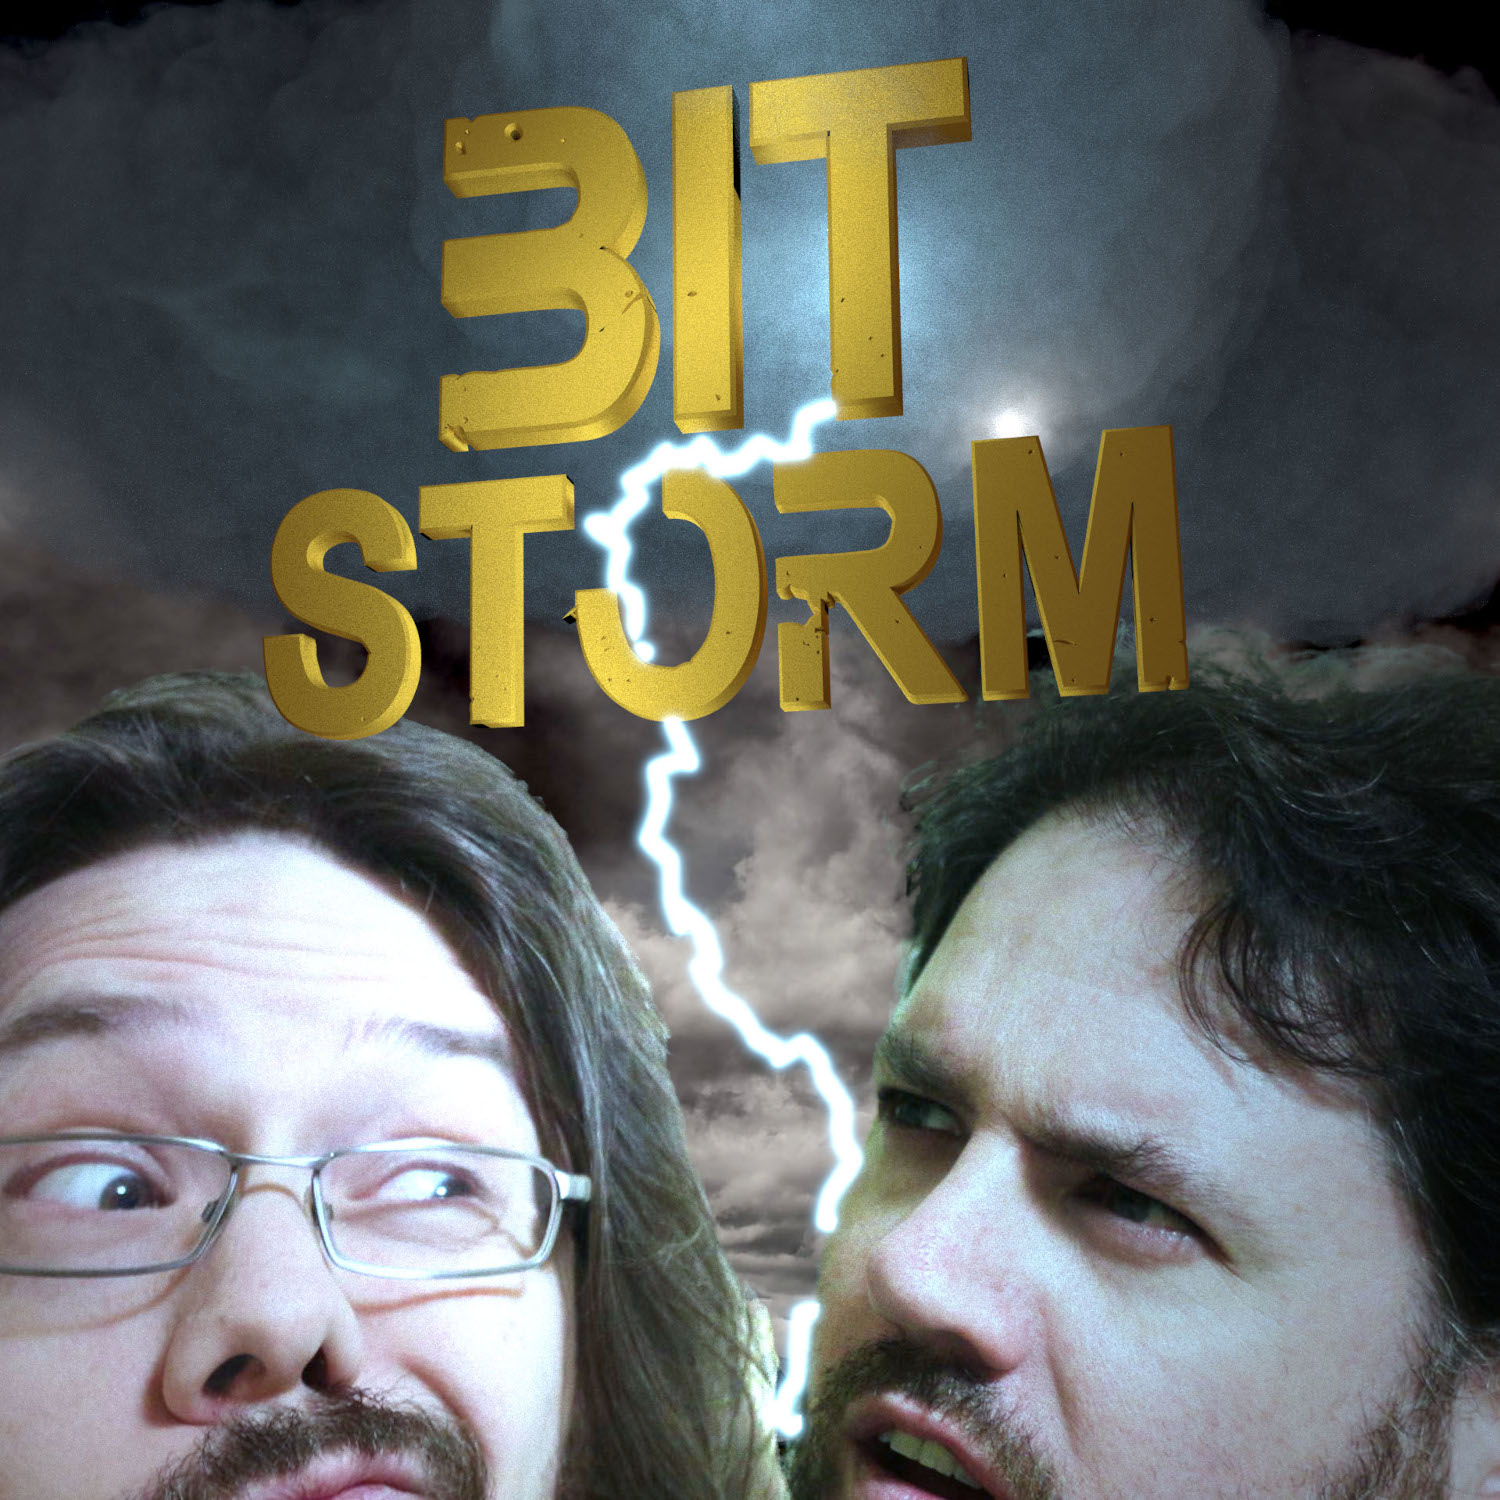 Show artwork for Bit Storm